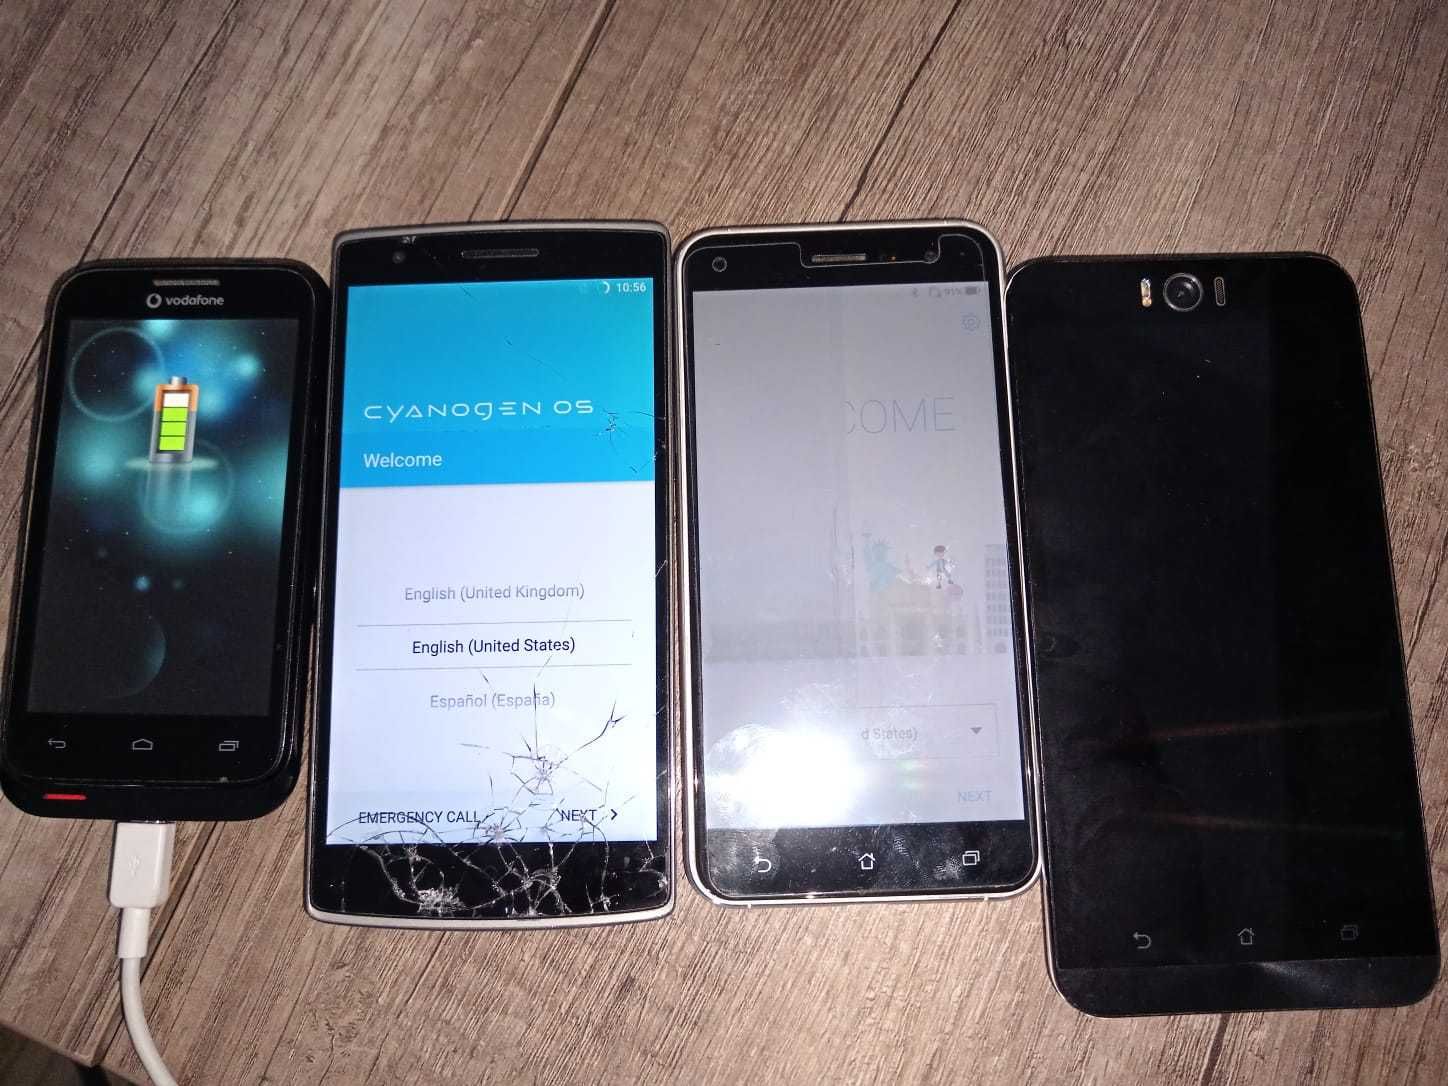 OnePlus One, Asus Zenfone 3(Z017D), Asus Selfie(Z00UD), Vodafone 975